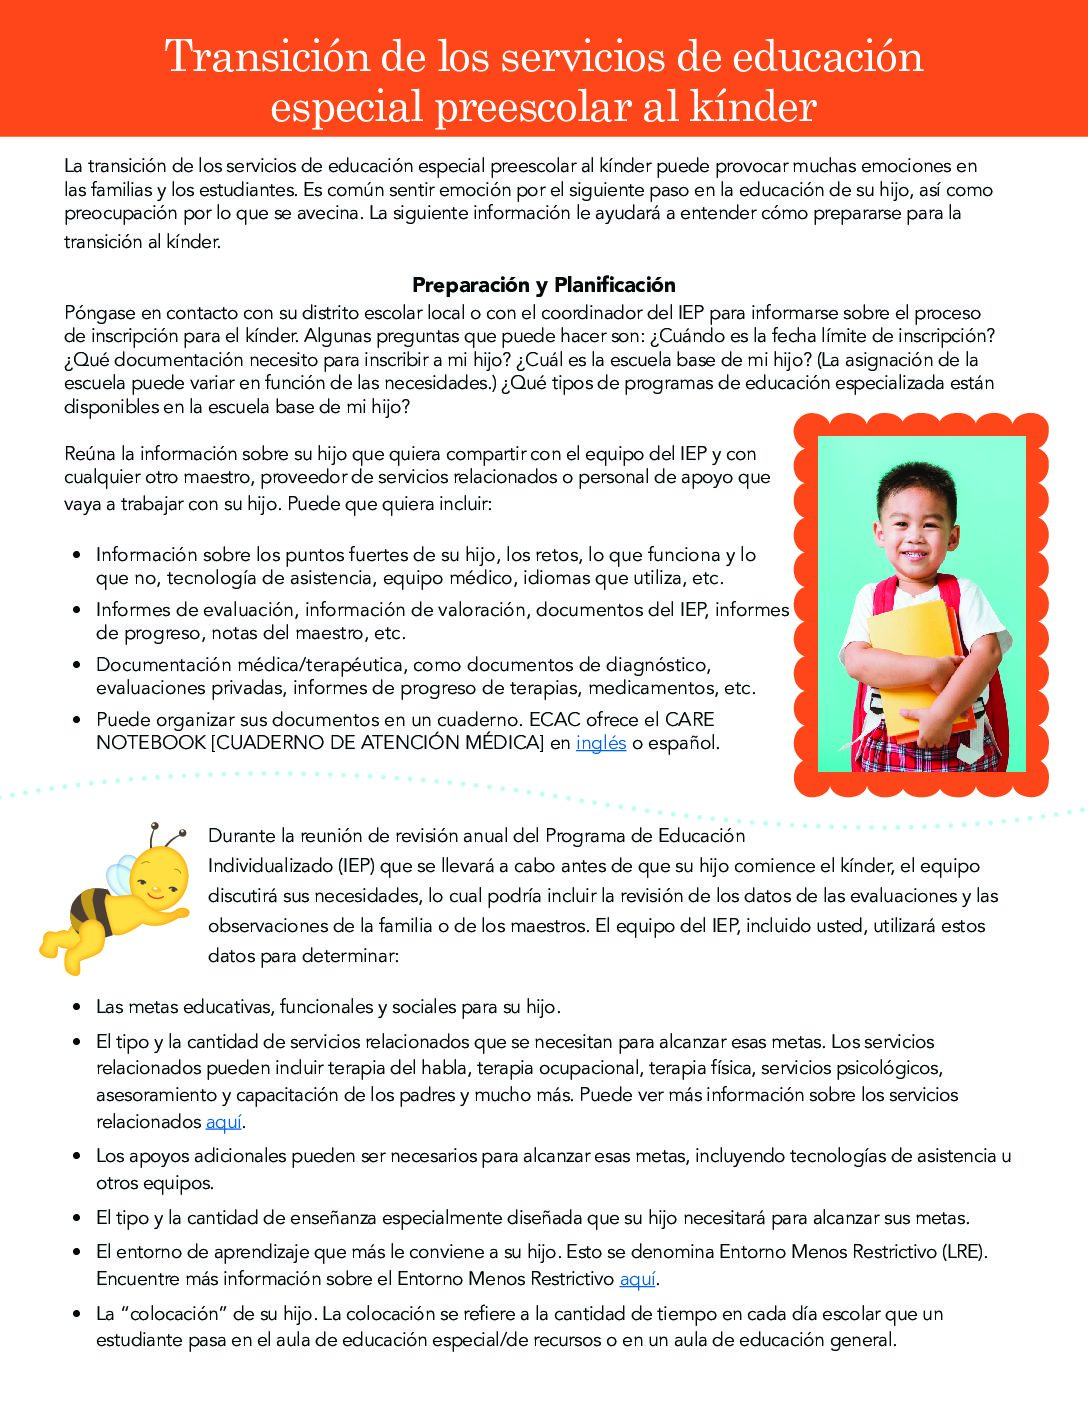 Transition to Kindergarten Fact sheet_10272022_Spanish